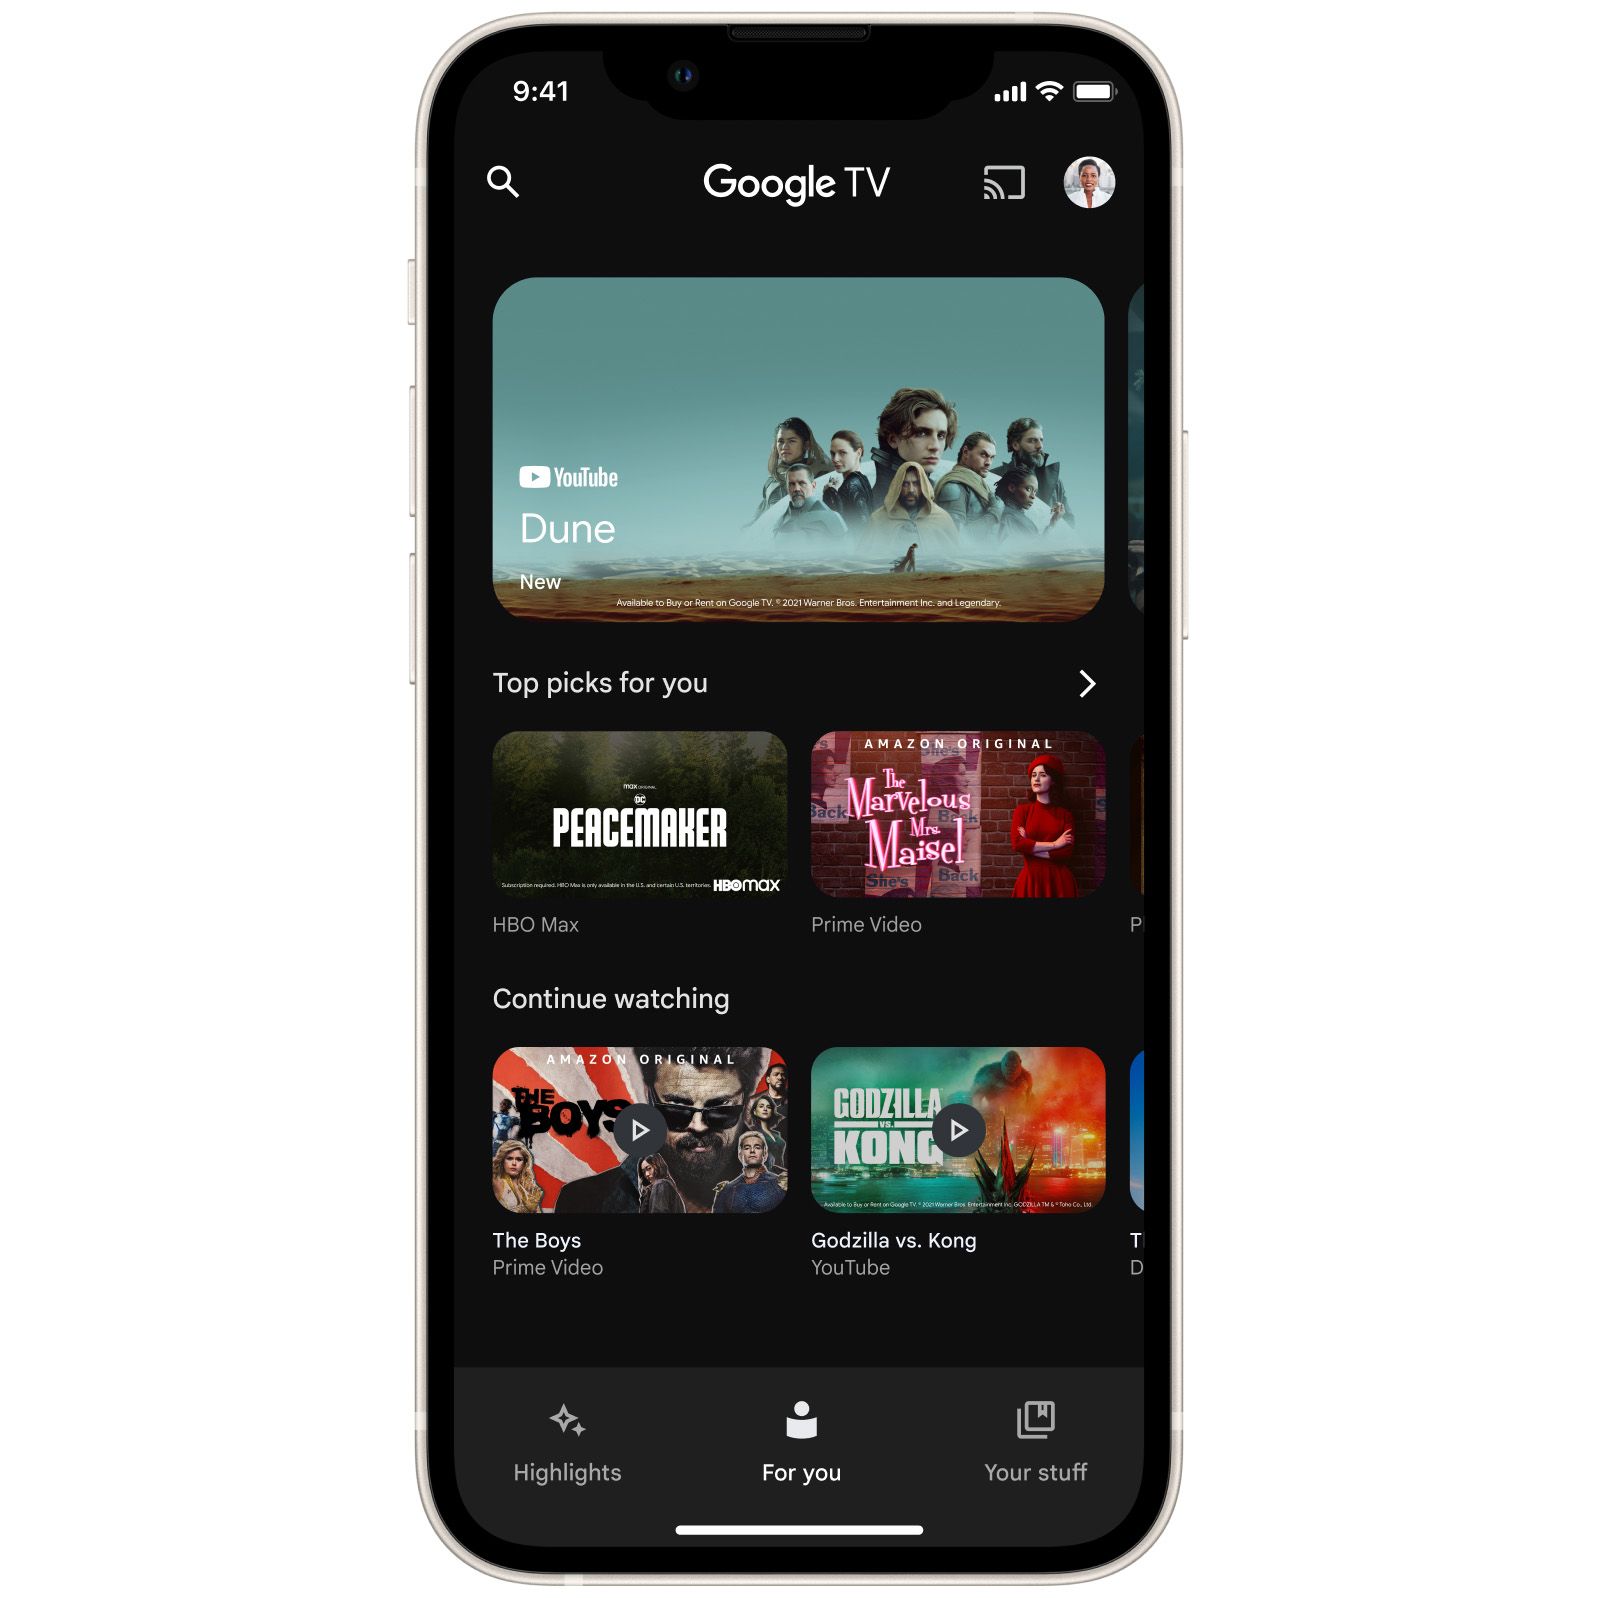 Google TV screenshot on iPhone